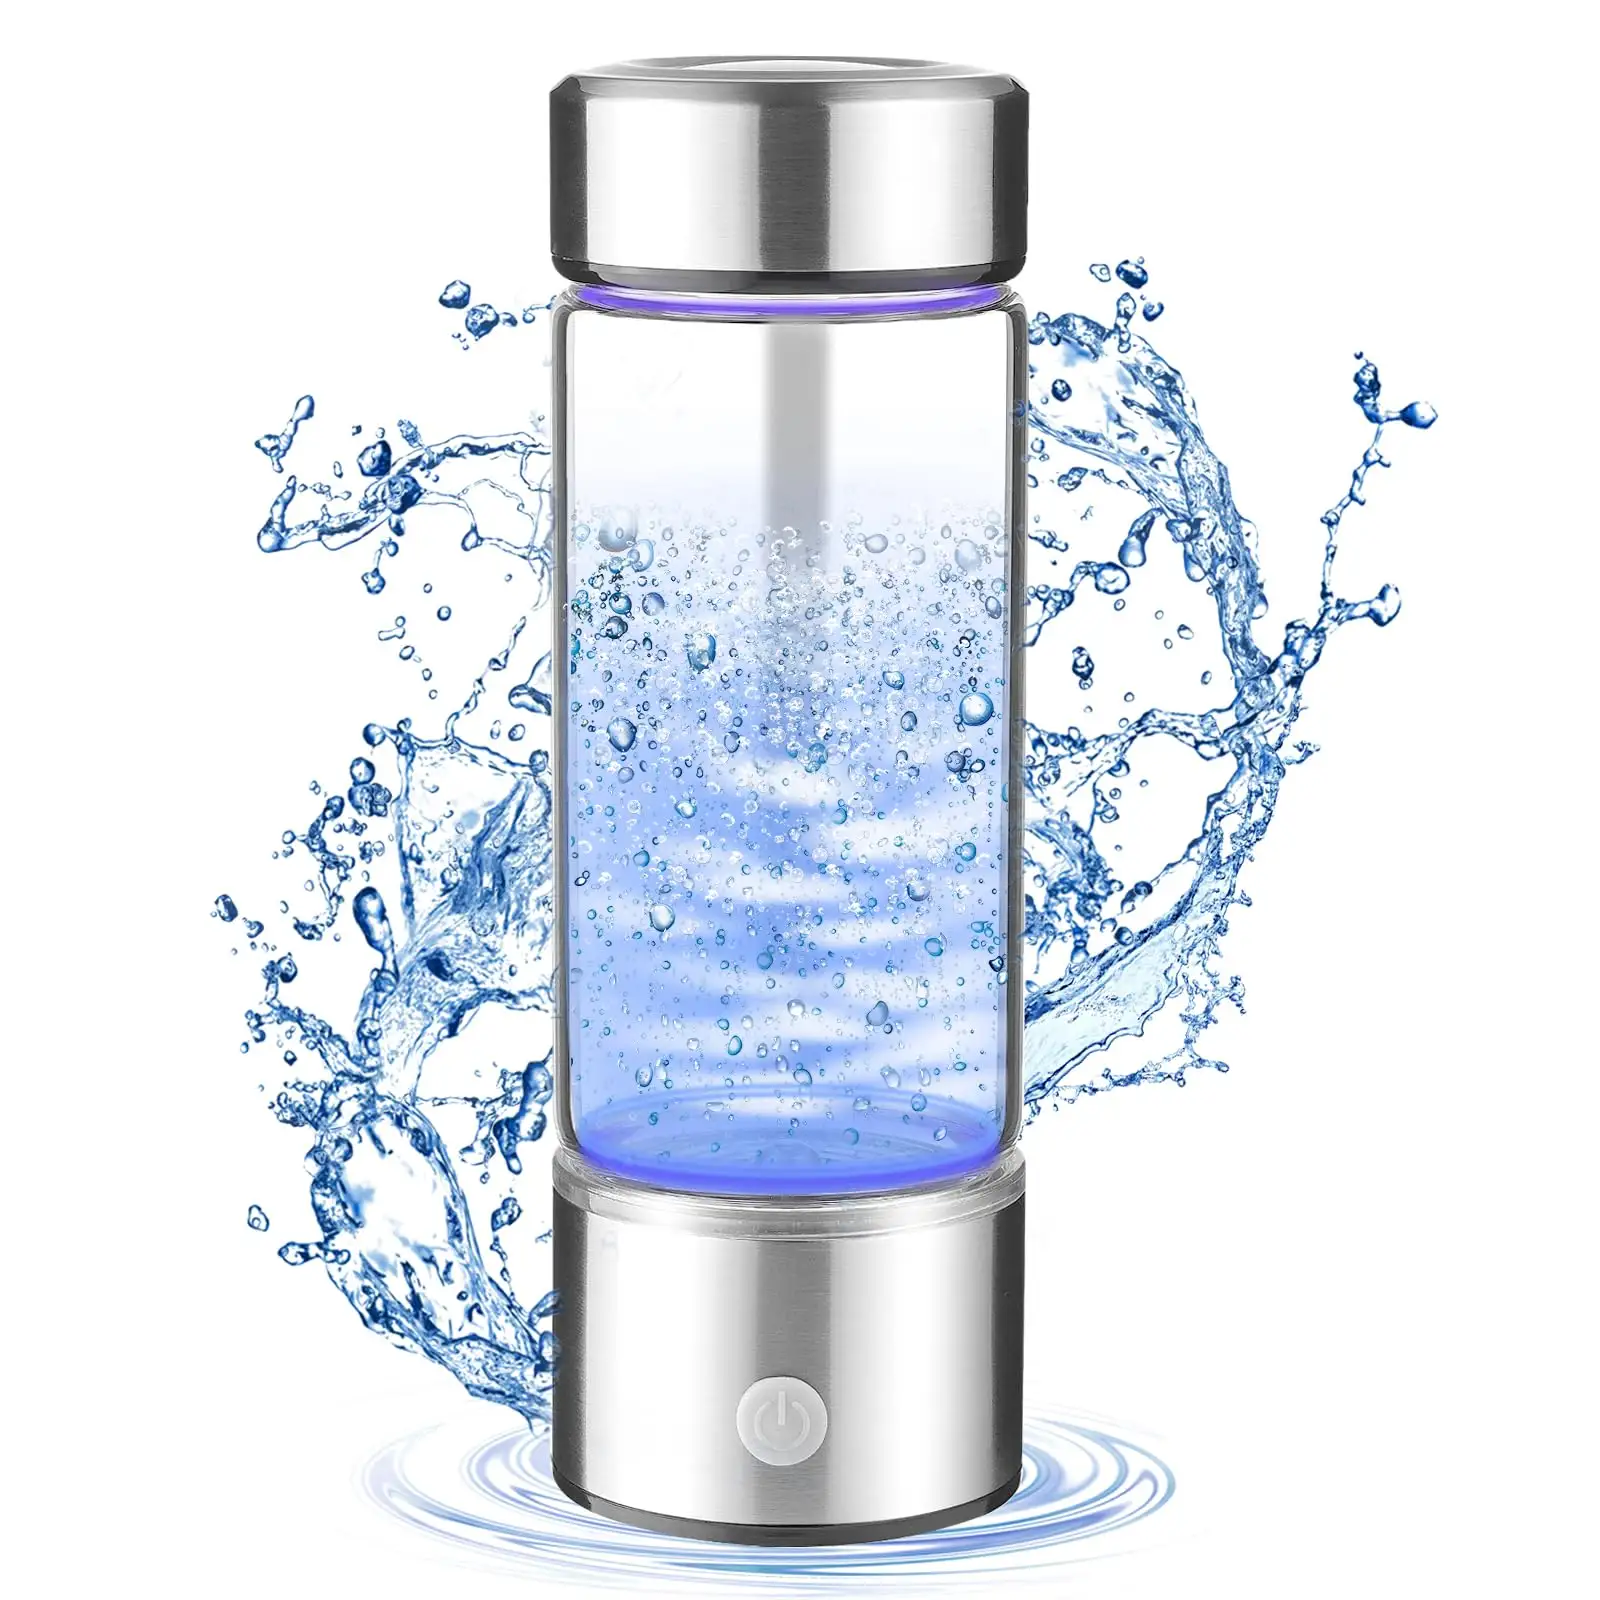 Garrafa de água com filtro para garrafa de água, garrafa de água rica em hidrogênio alcalina e ionizadora com garrafa de vidro